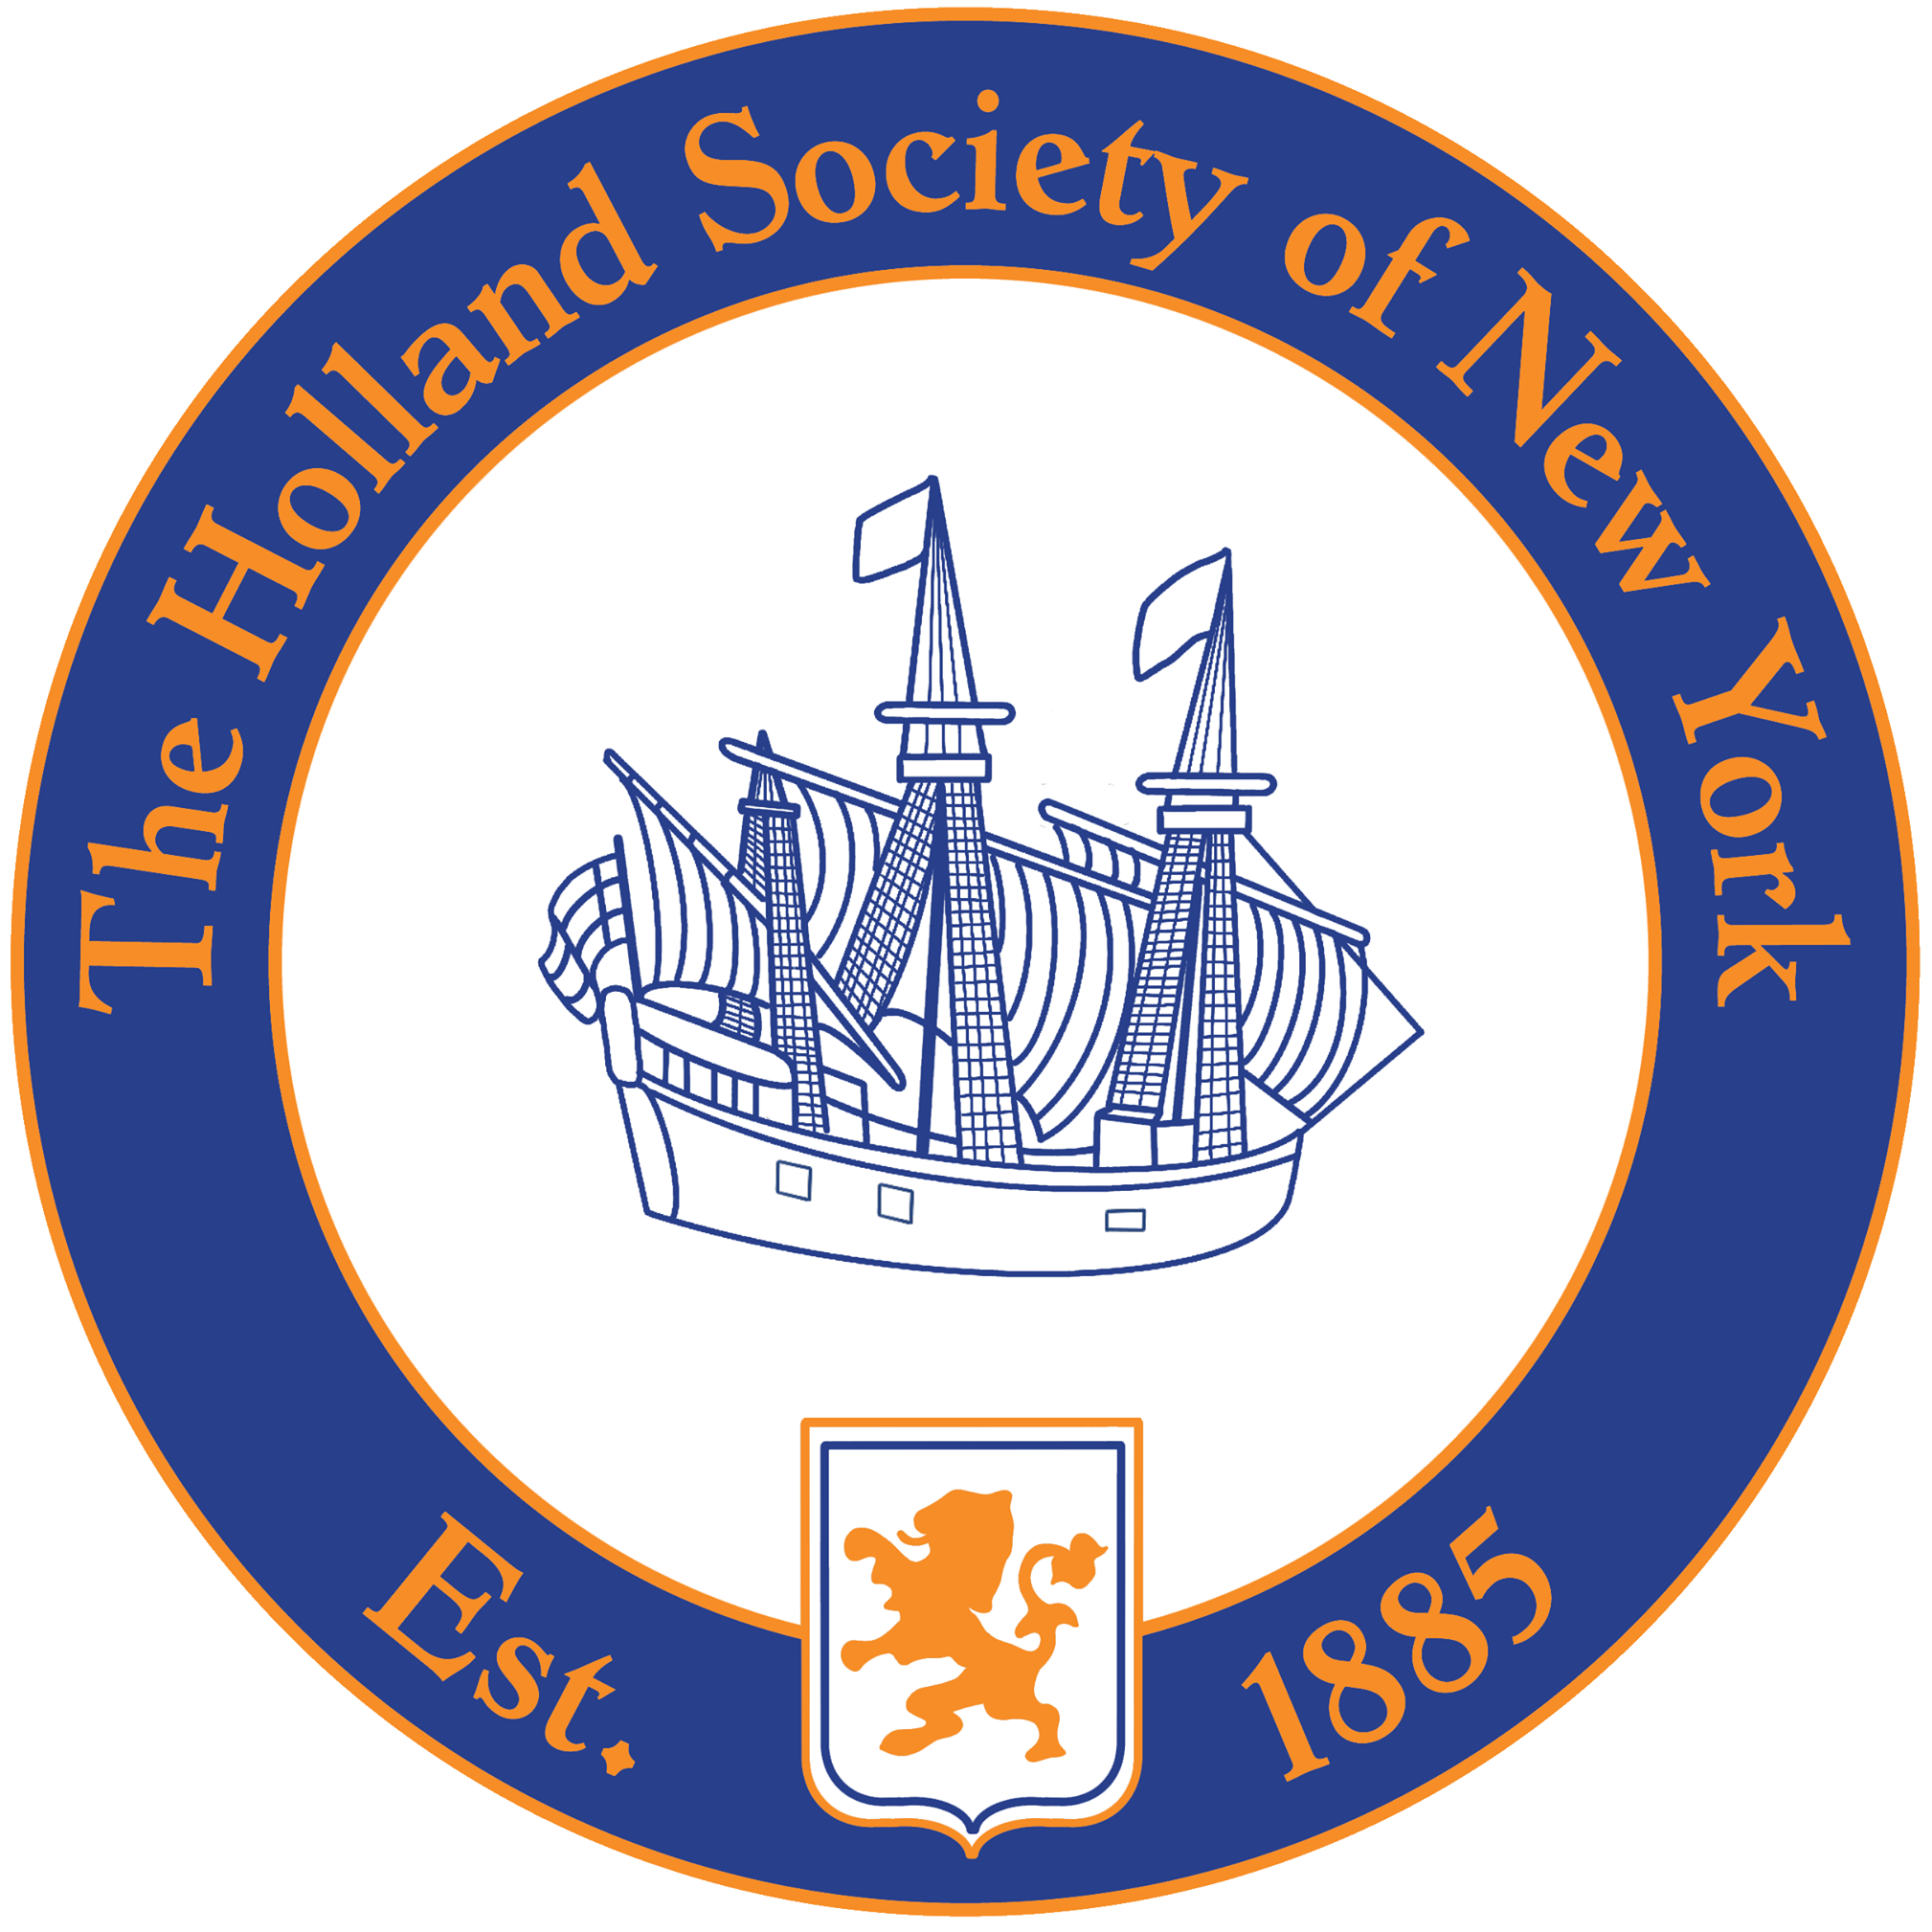 Dutch Organizations in New York New York - The Holland Society of New York